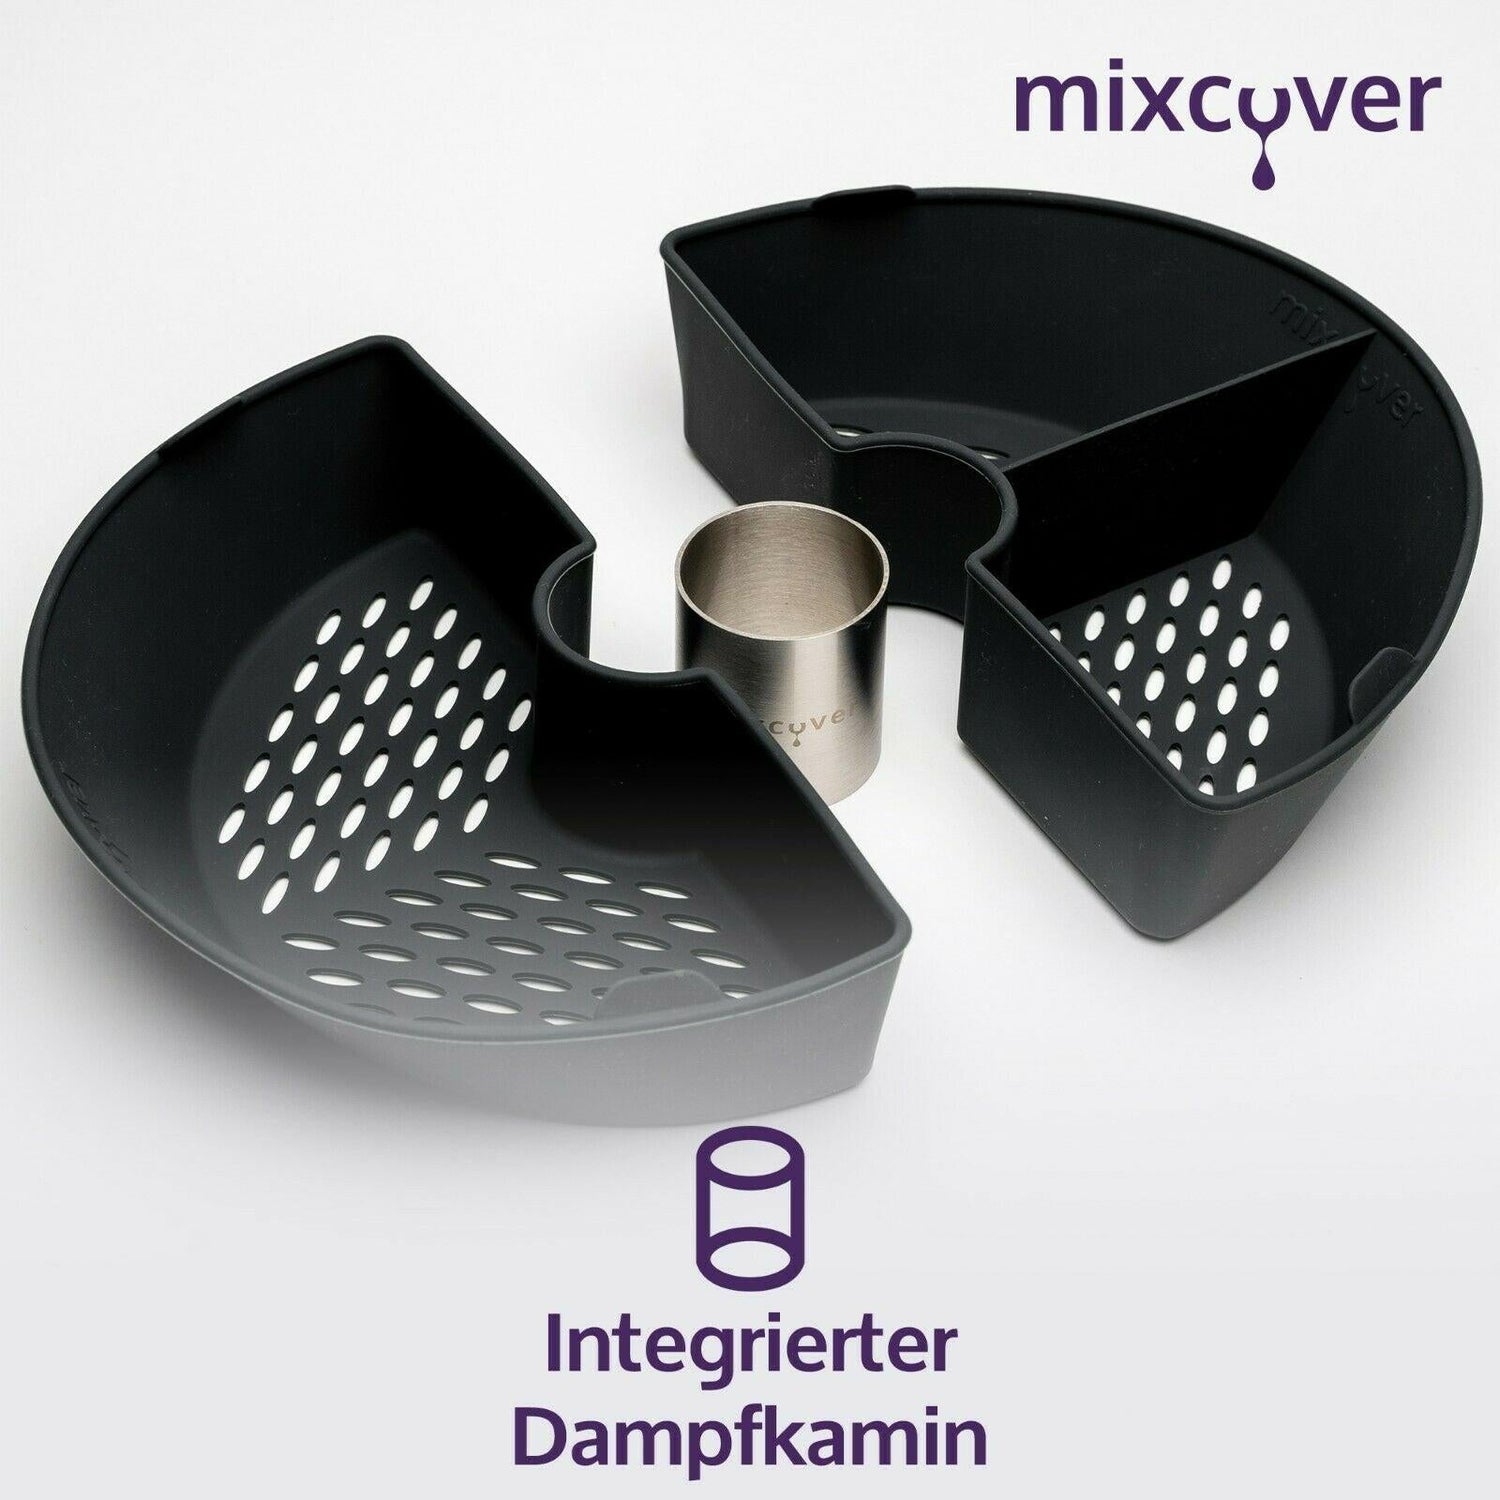 mixcover Garraumteiler (HALB) für Bosch Cookit Dampfgarraum - Mixcover - Mixcover